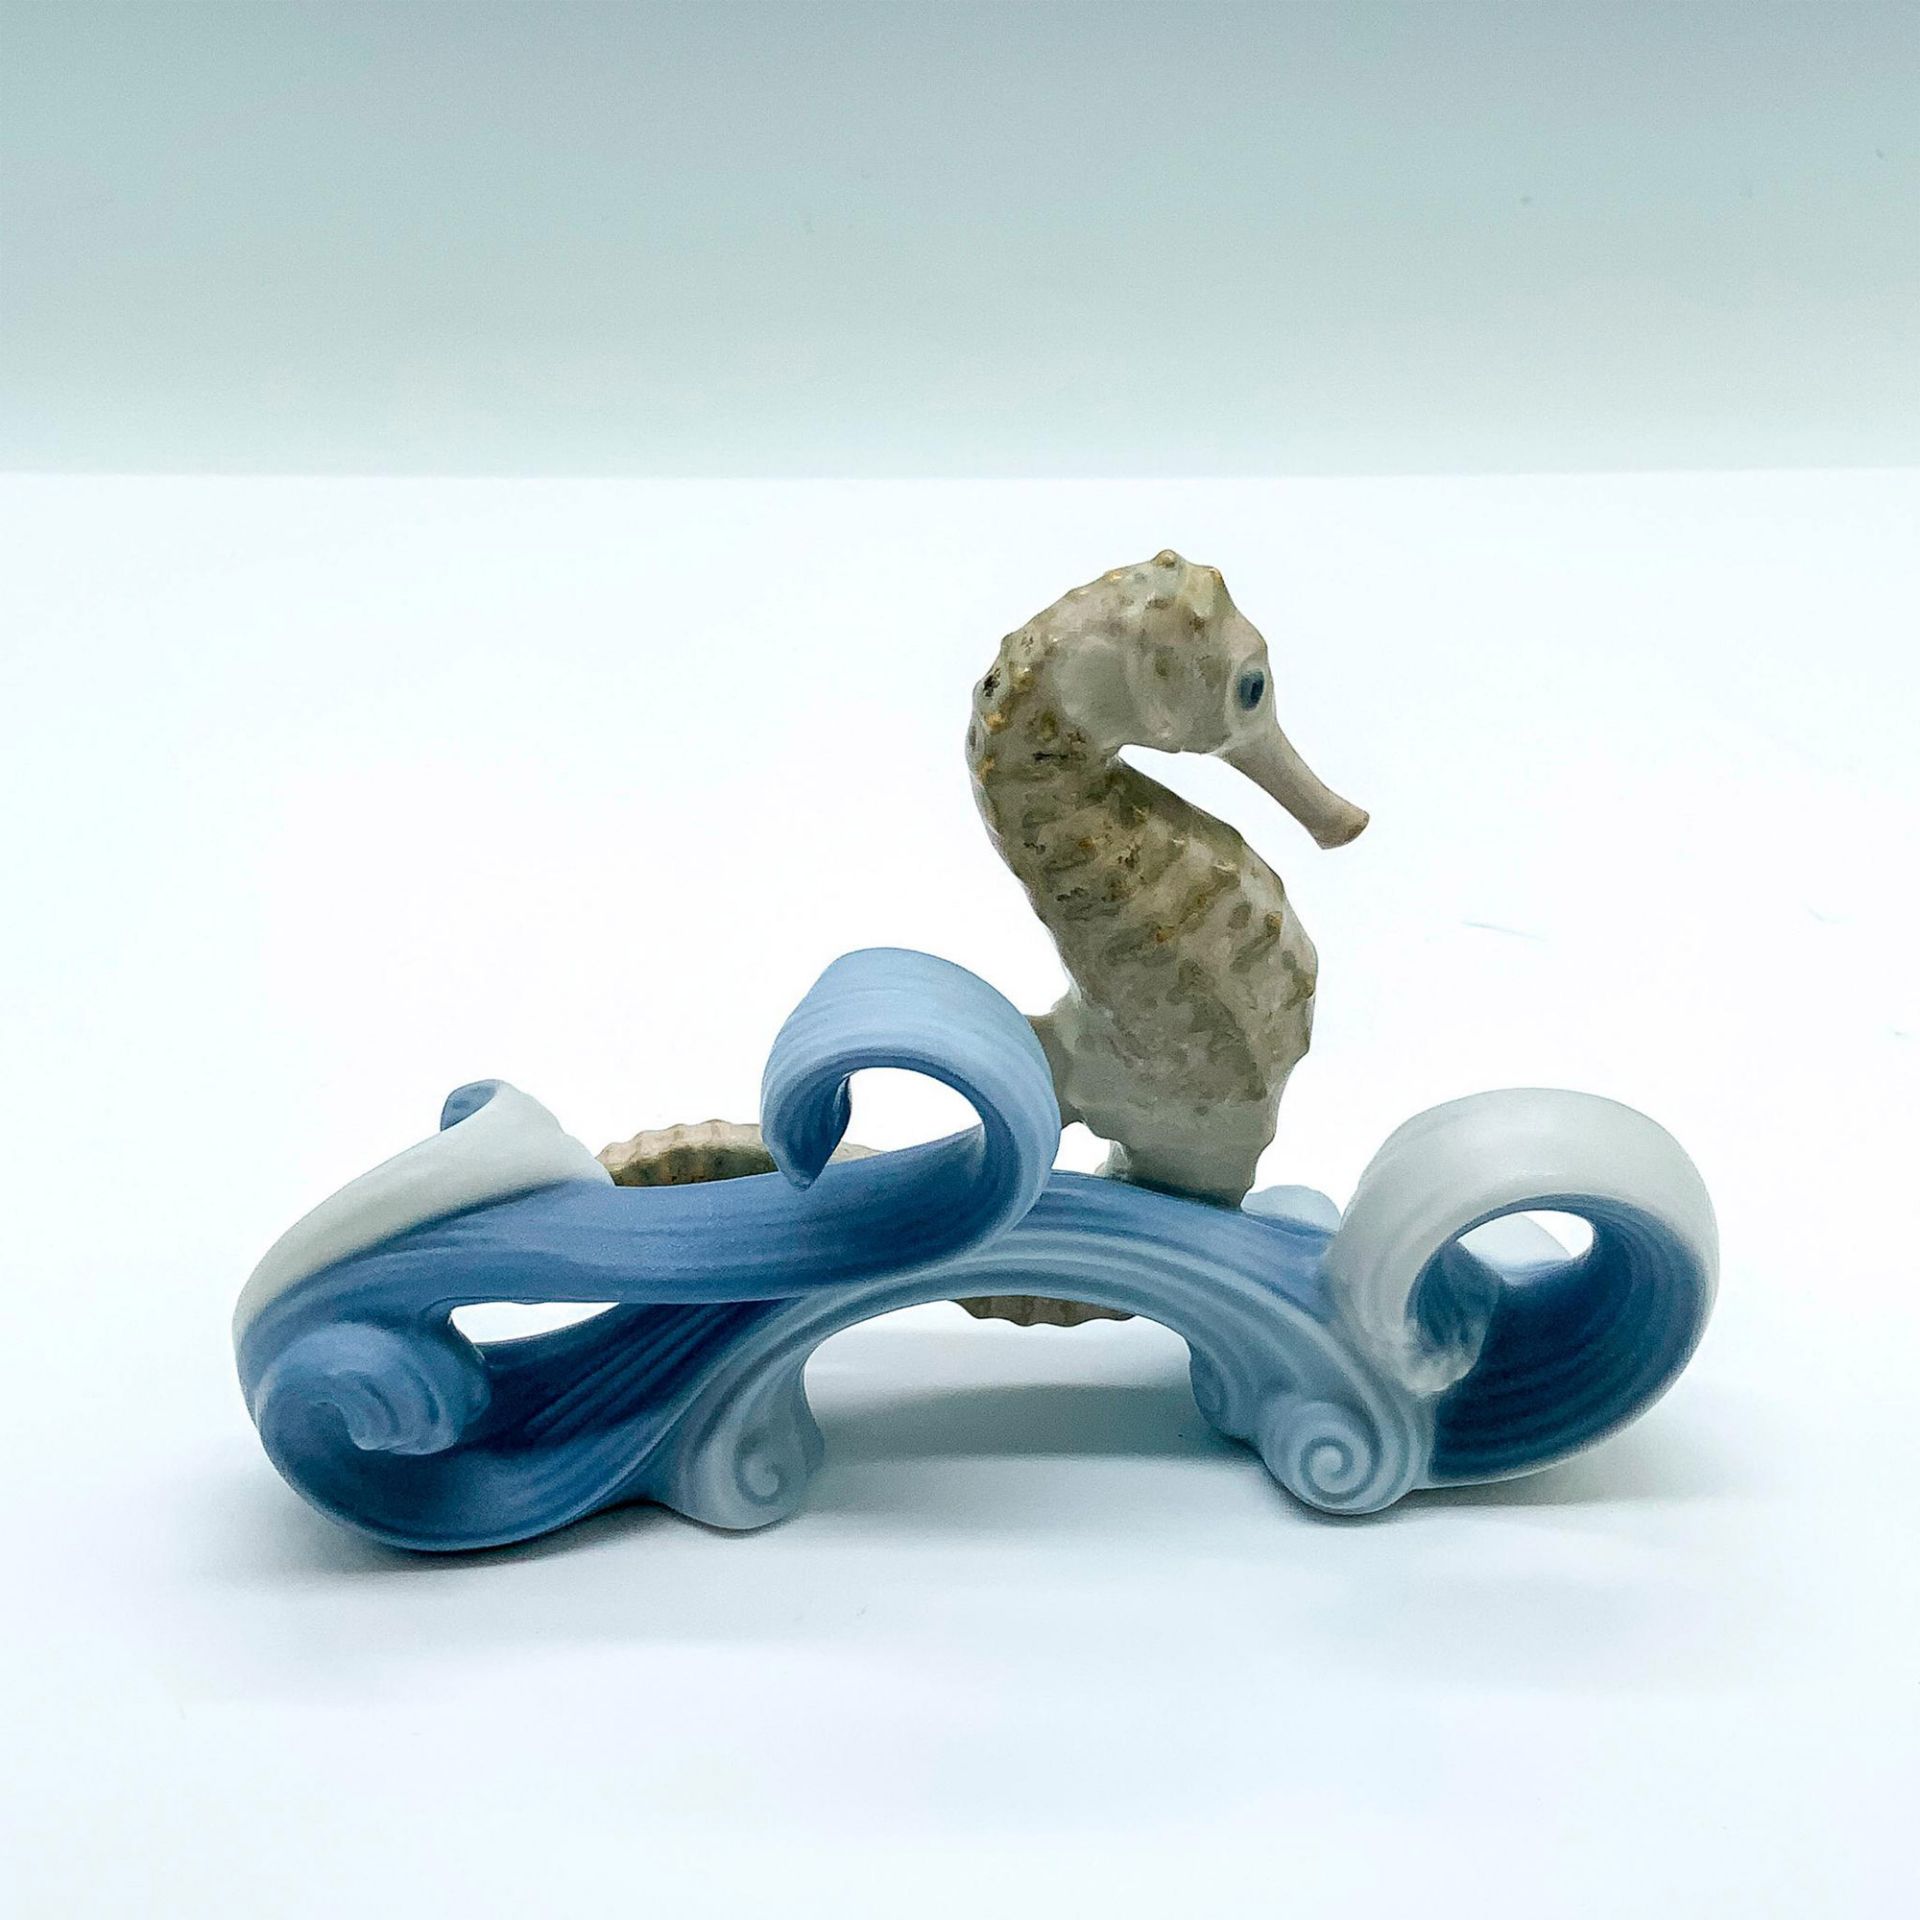 Seahorse 1018176 - Lladro Porcelain Figurine - Image 2 of 3